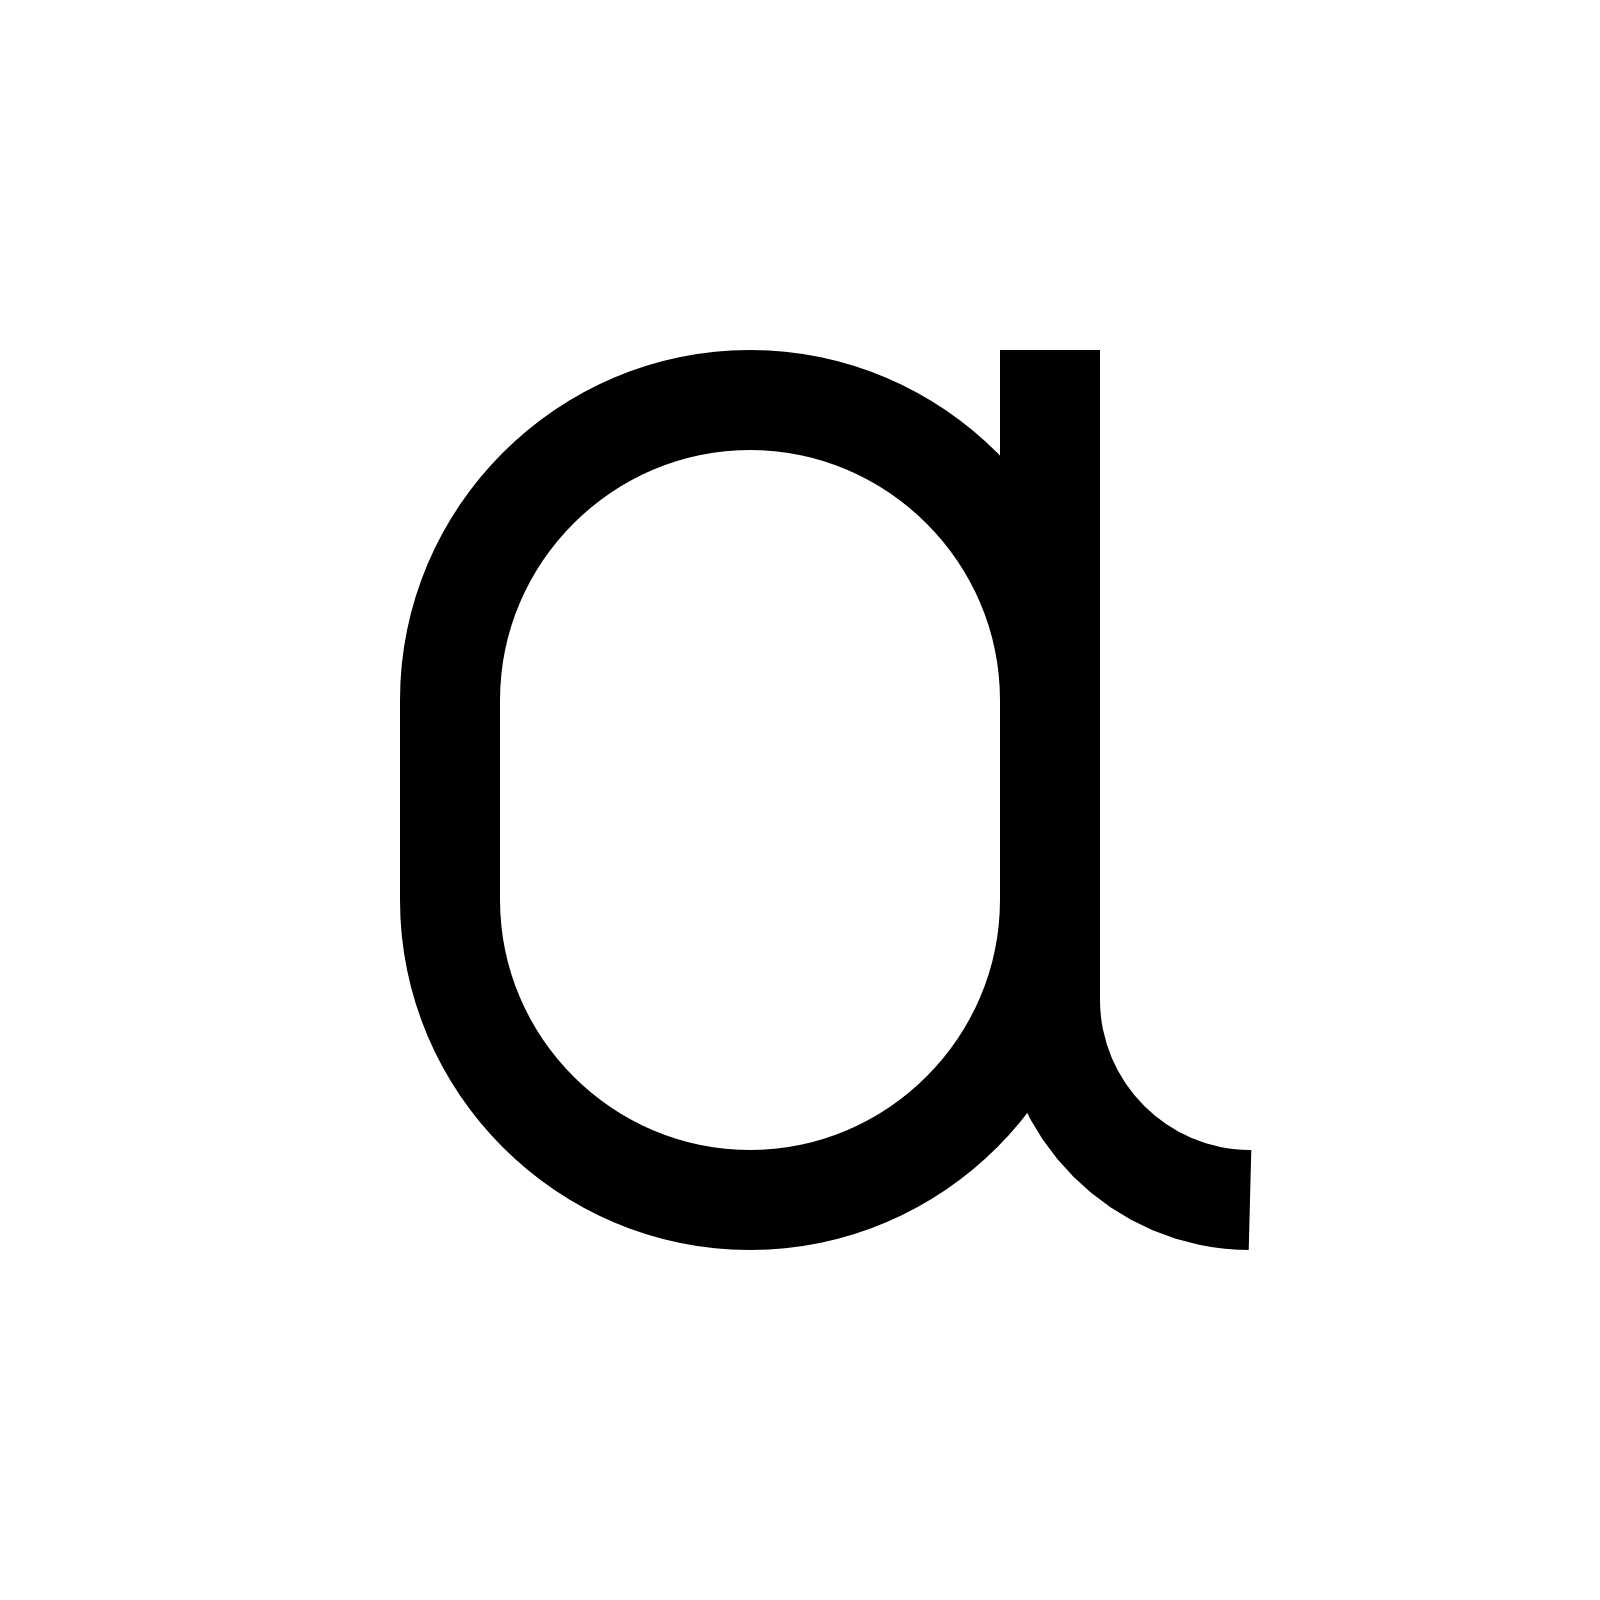 Alfa буква. Альфа символ. Греческая Альфа символ. Альфа буква и символ. Альфа знак вектор.